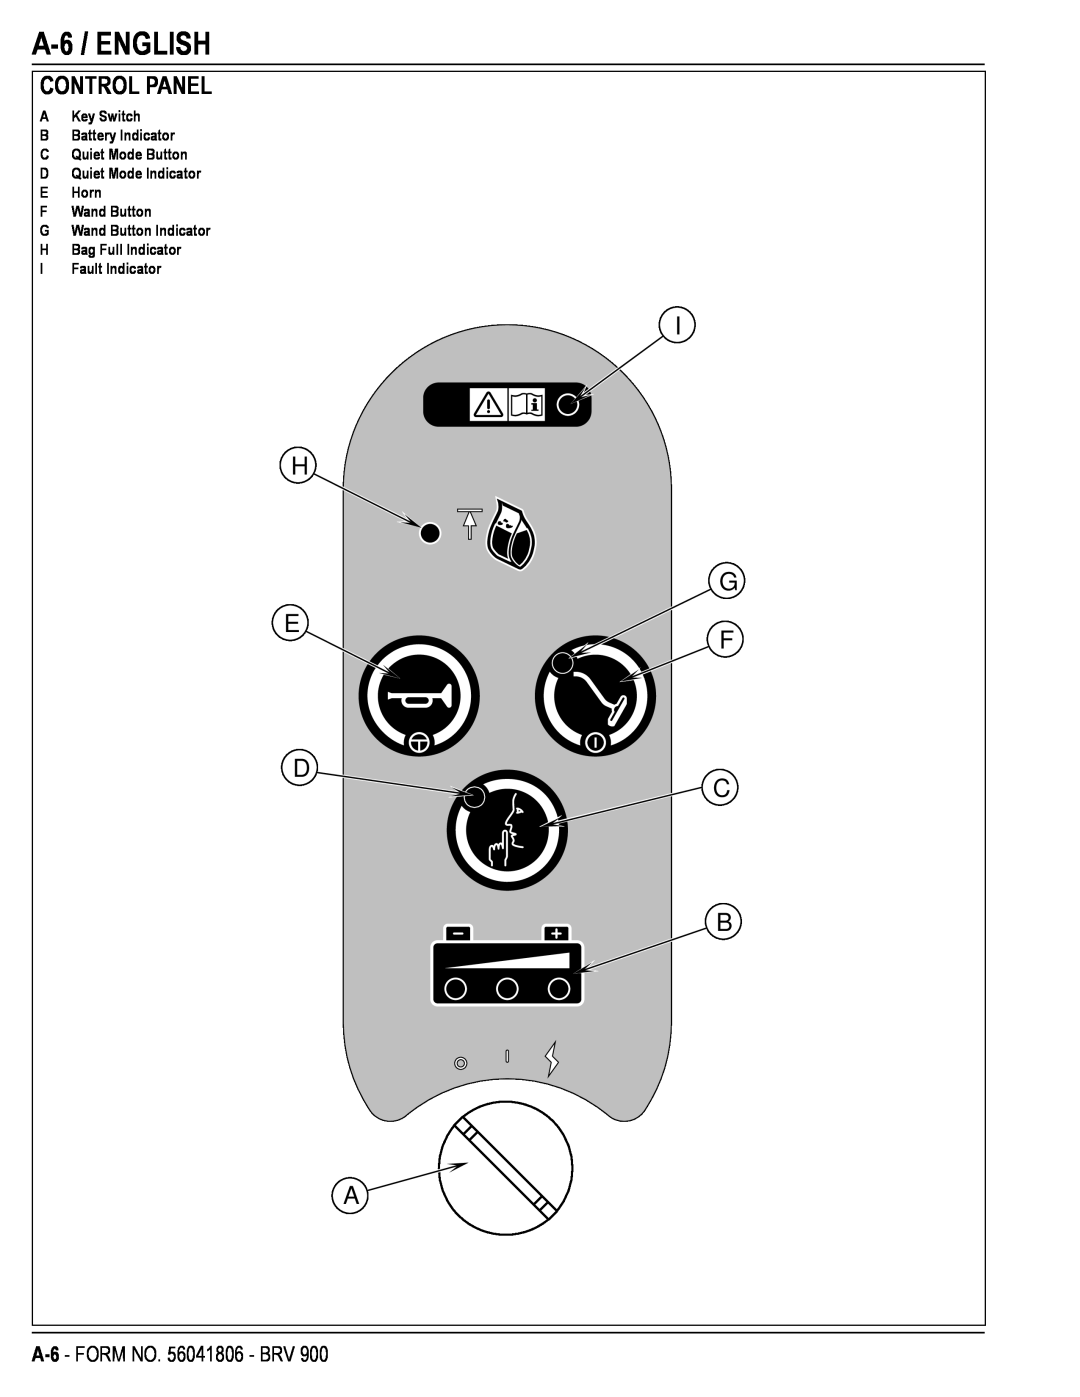 Nilfisk-Advance America BRV 900 manual A-6 /ENGLISH, Control Panel, A-6 - FORM NO. 56041806 - BRV, IFault Indicator 